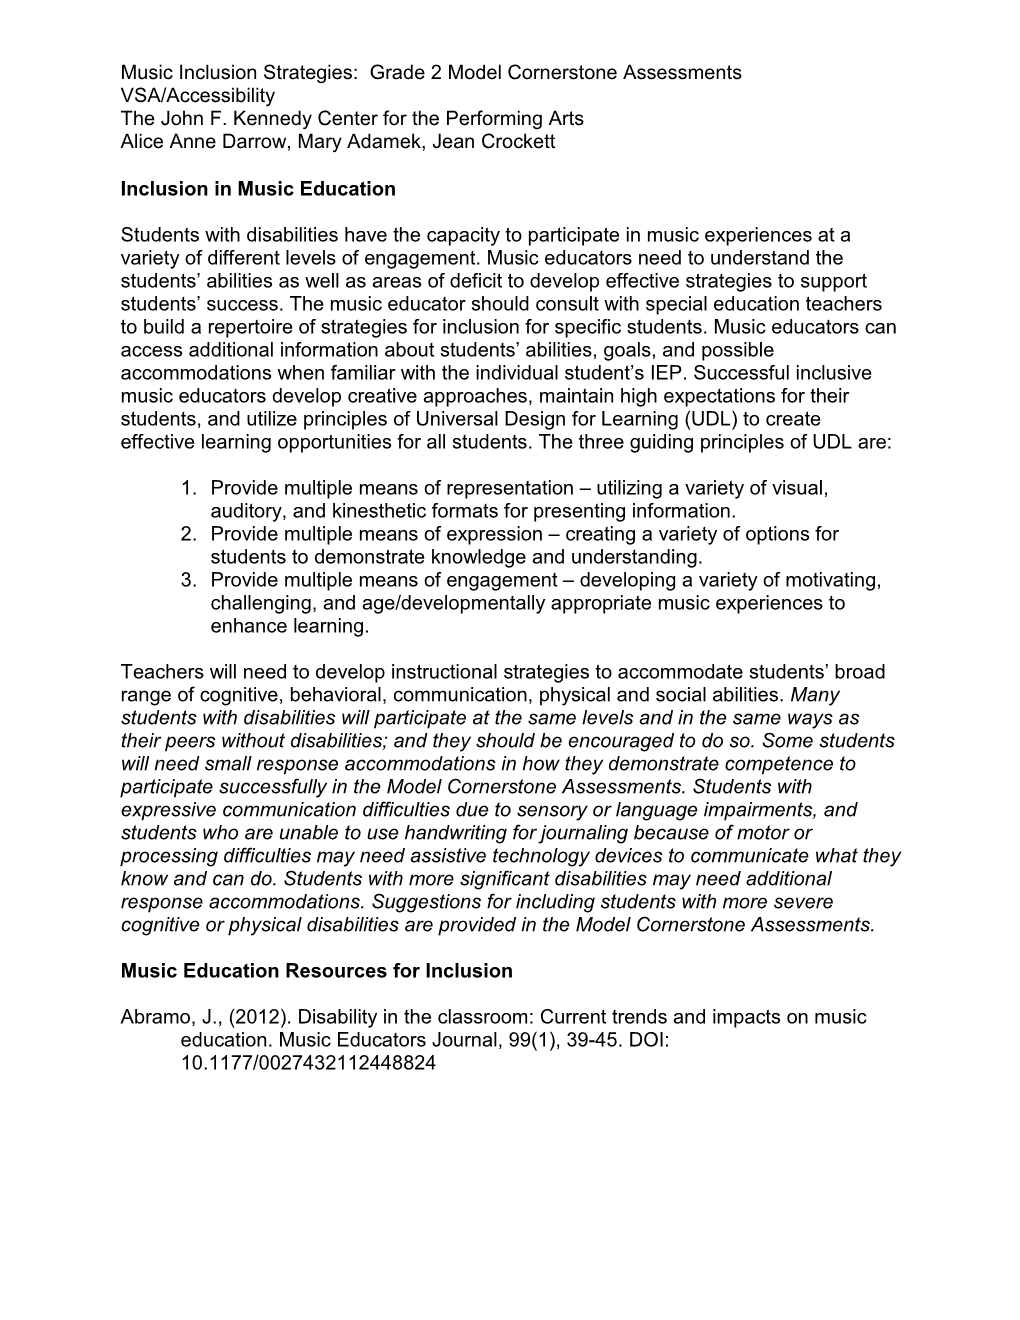 Music Inclusion Strategies: Grade 2 Model Cornerstone Assessments VSA/Accessibility the John F